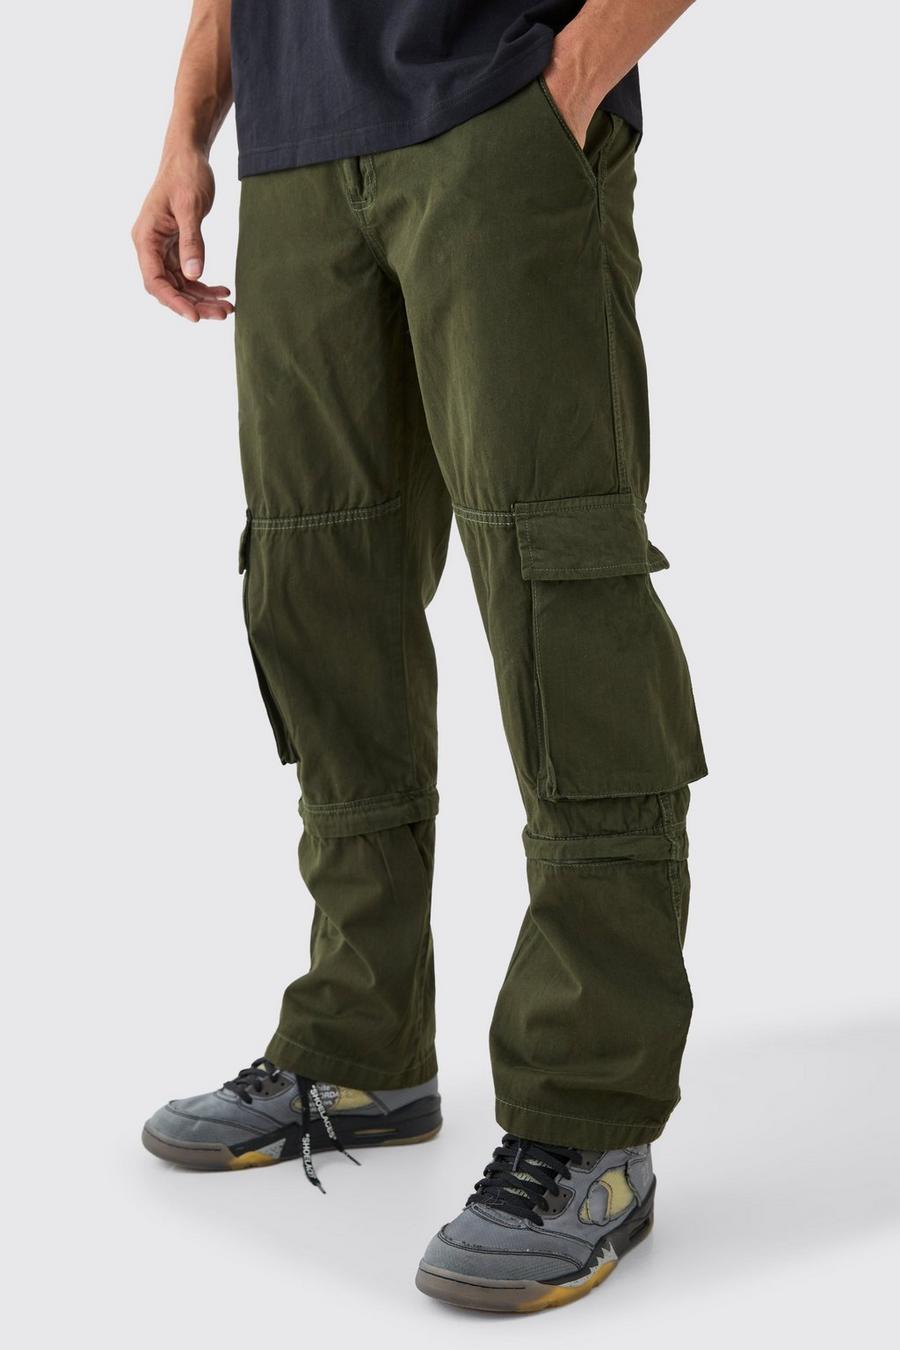 U.S. Polo Assn. Men's Slim Fit Twill Cargo Pants